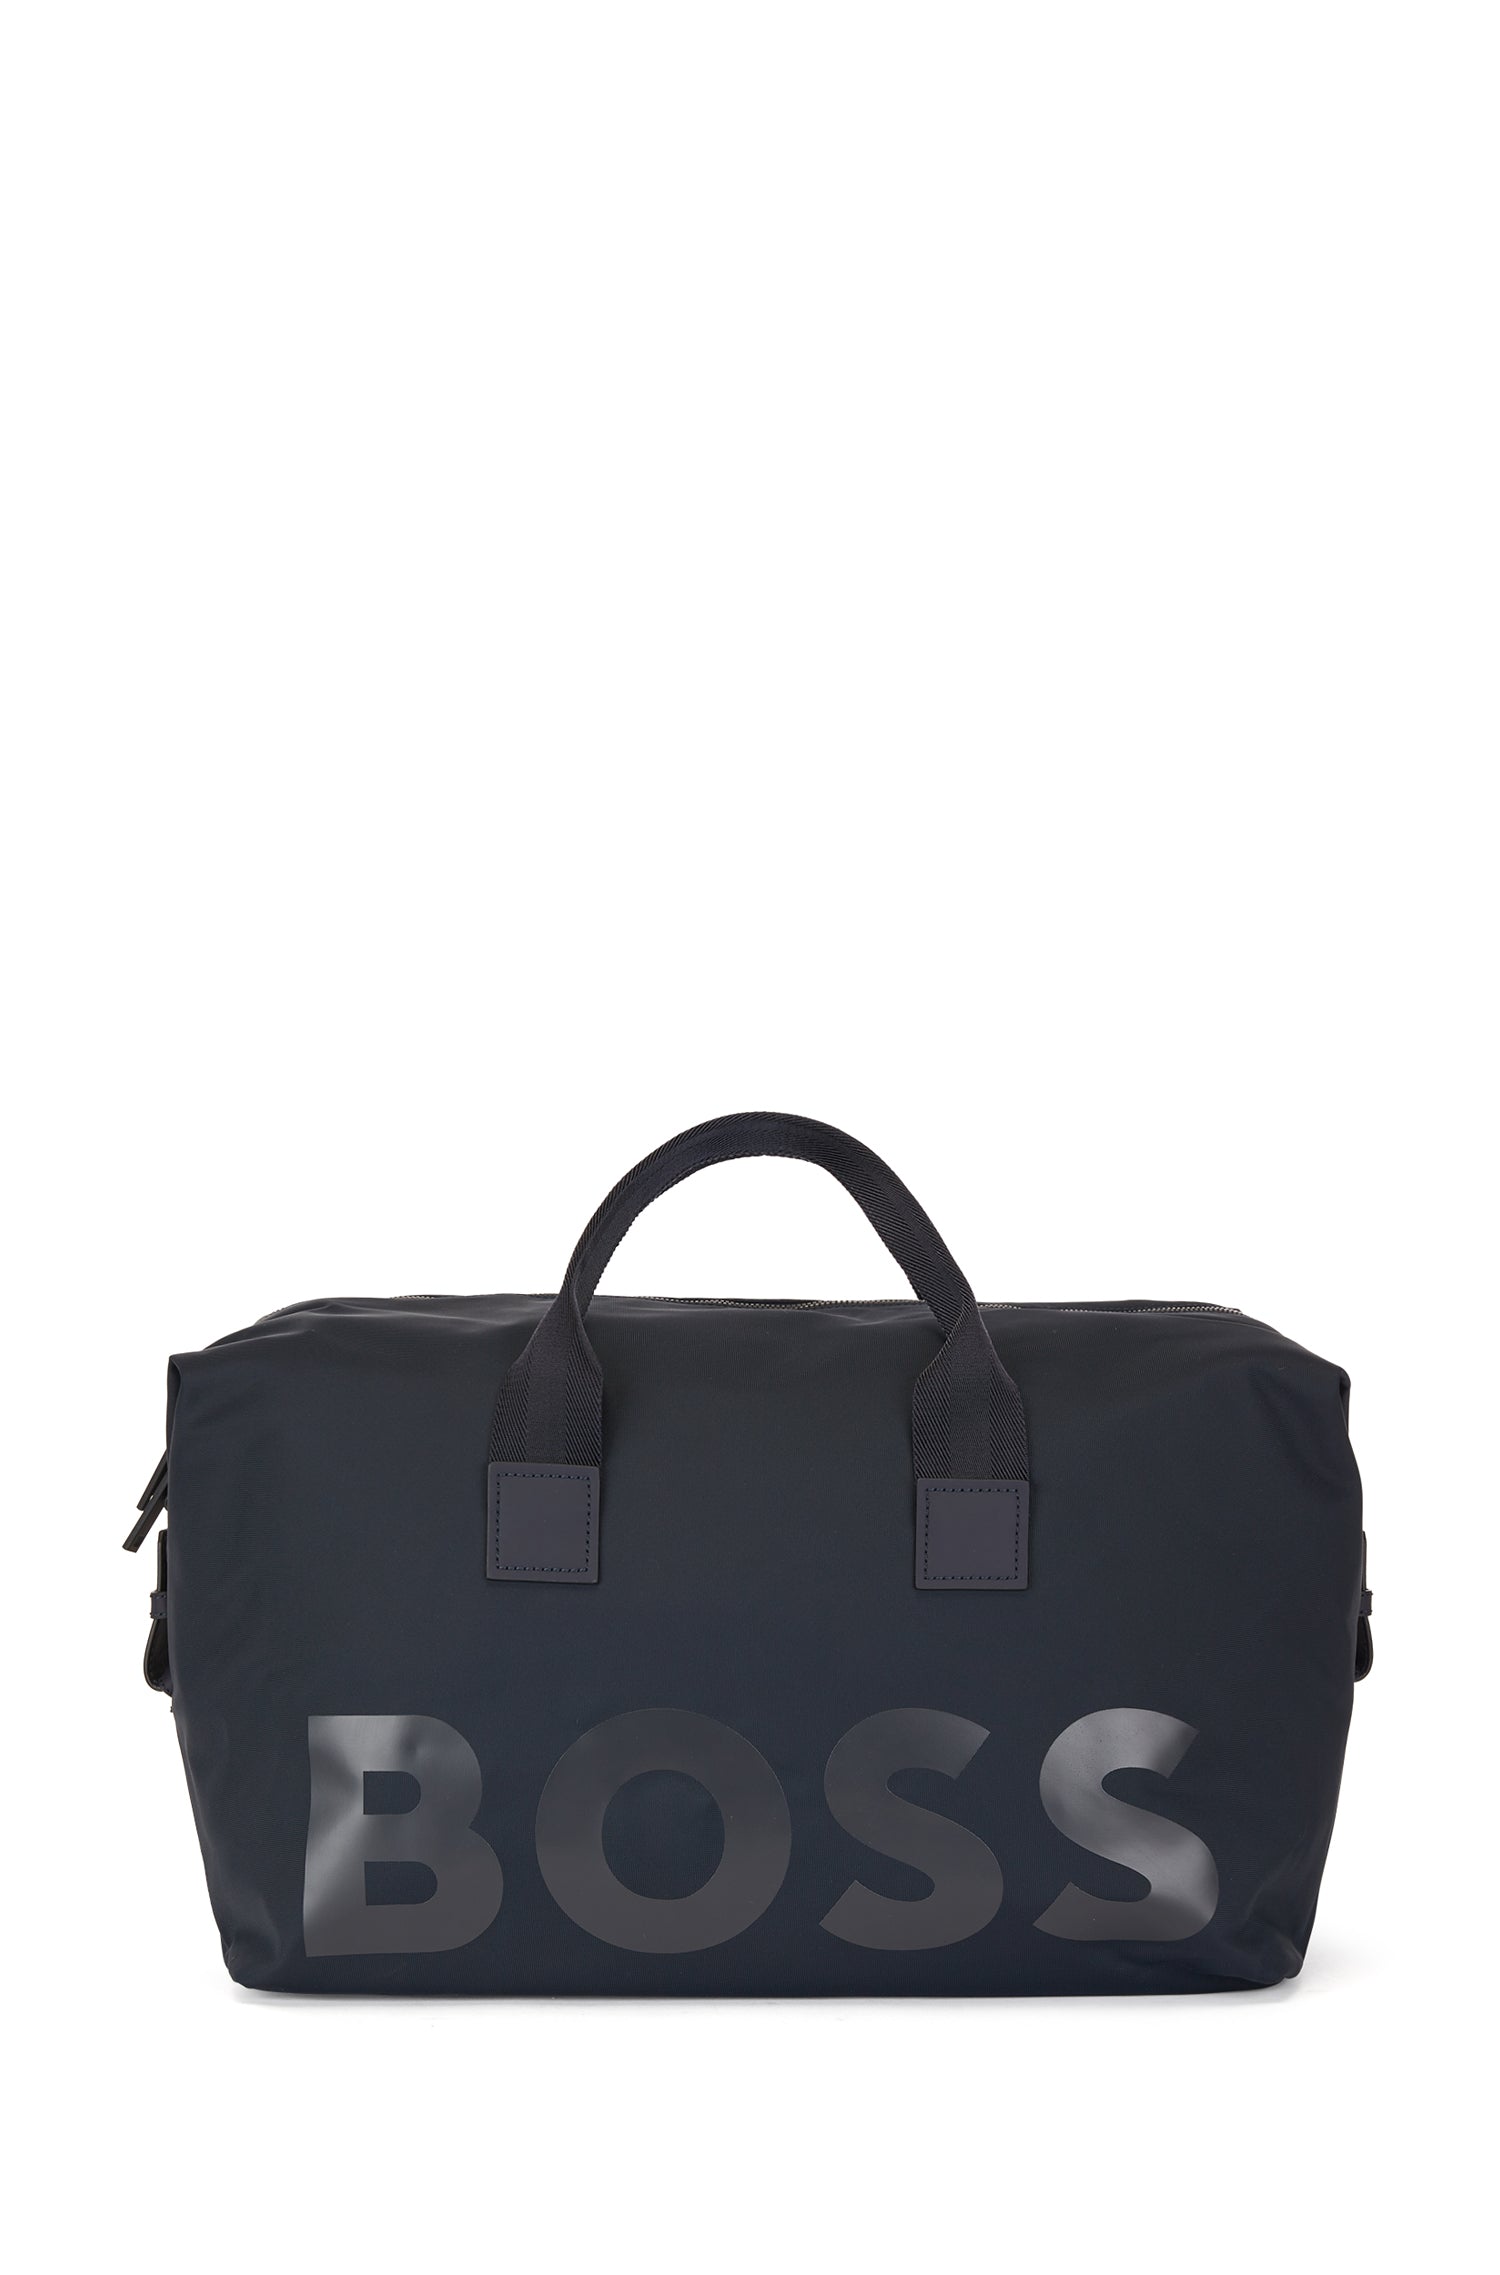 BOSS by HUGO BOSS Leather Laptop Bag in Blue for Men | Lyst